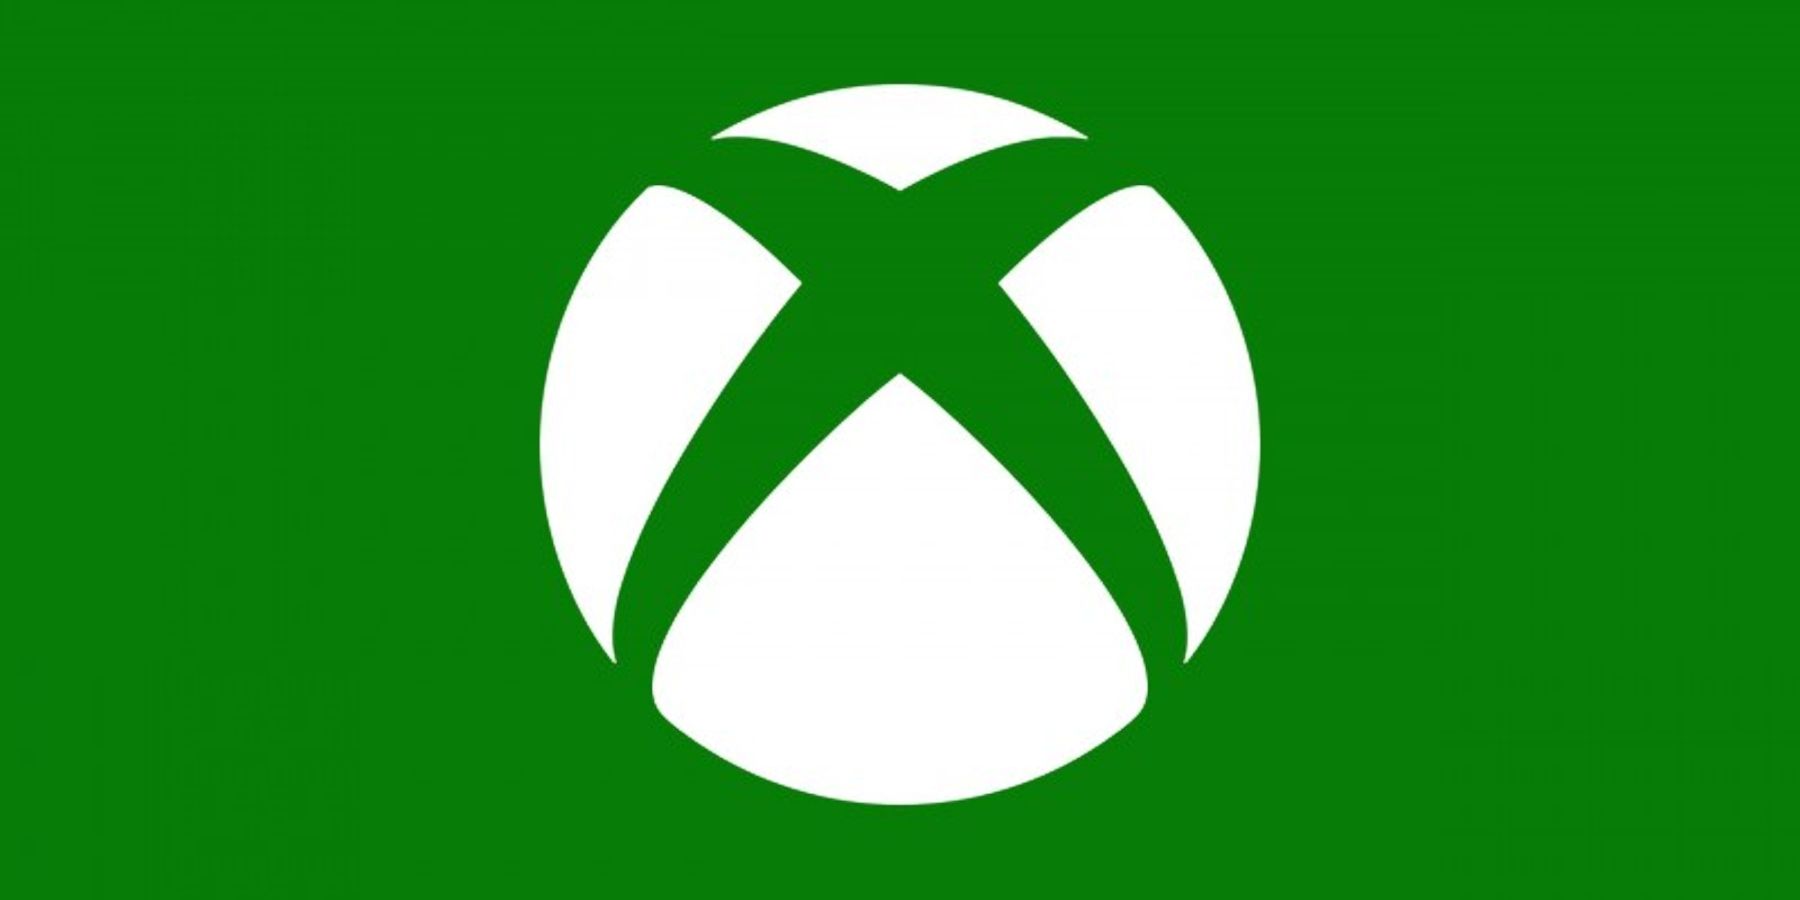 xbox green logo x shape